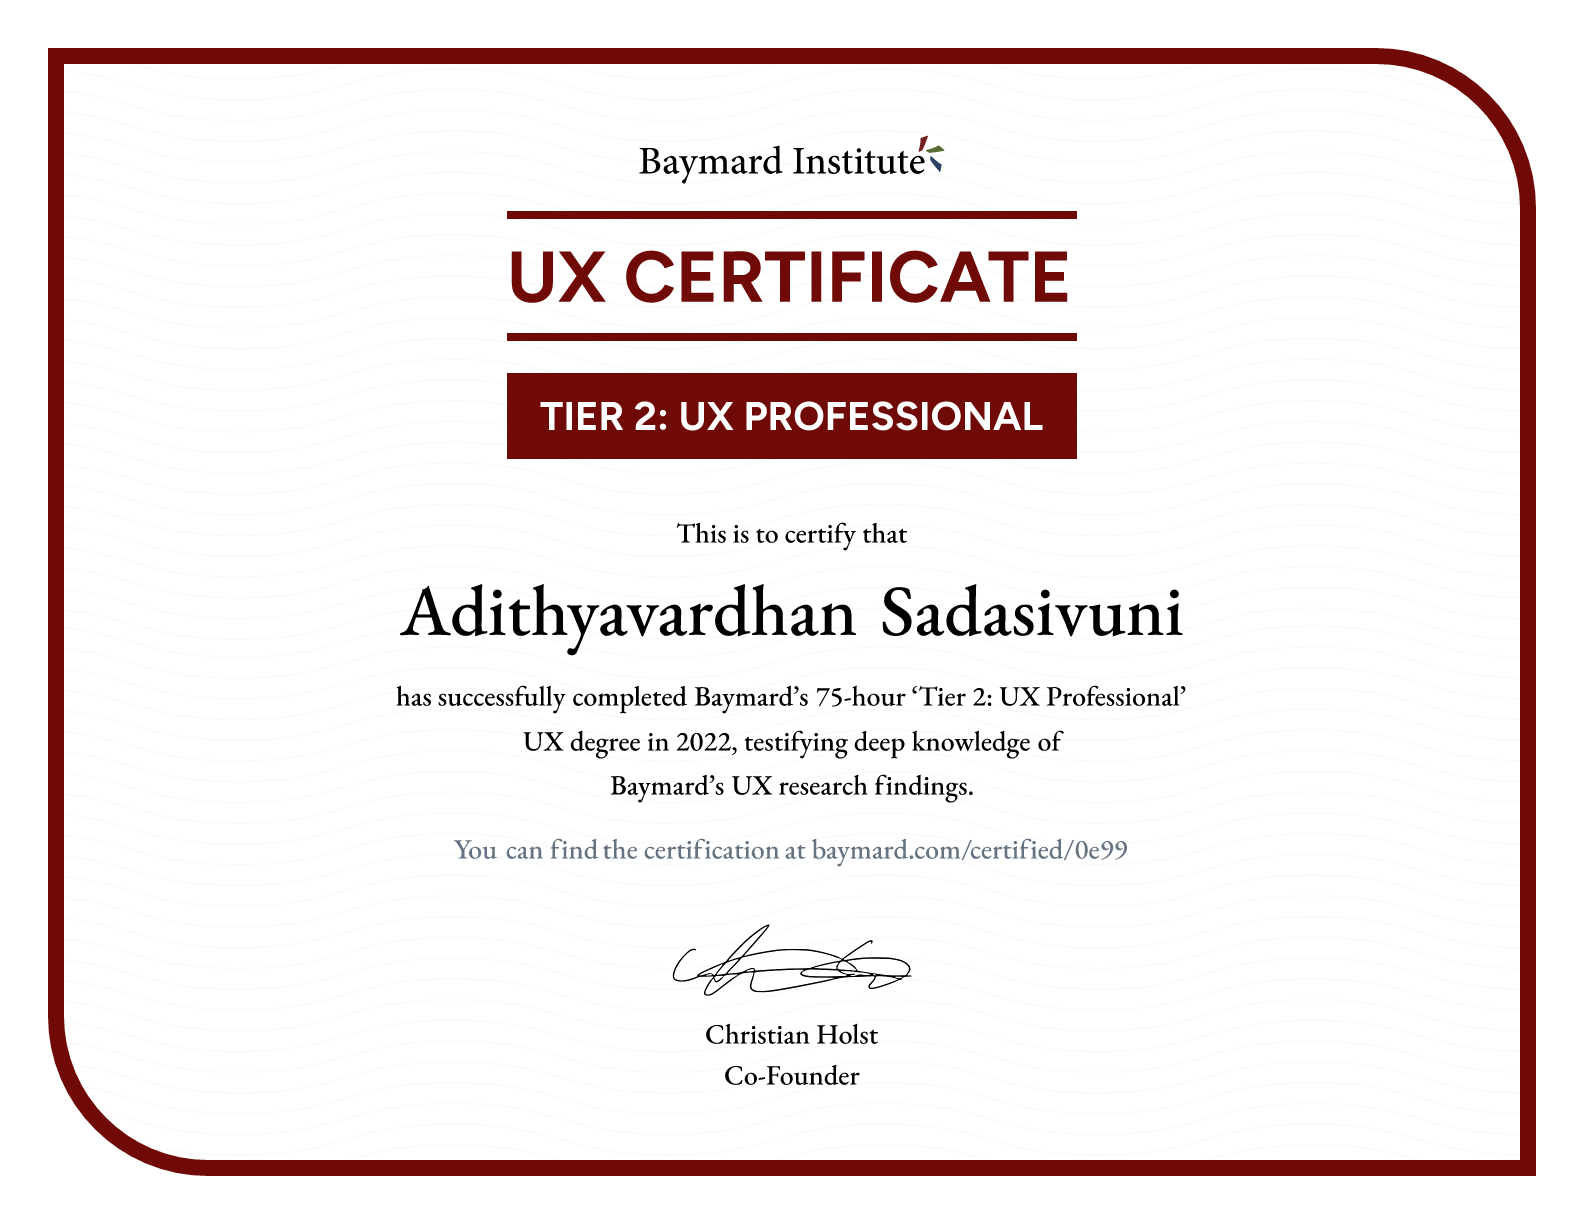 Adithyavardhan Sadasivuni’s certificate